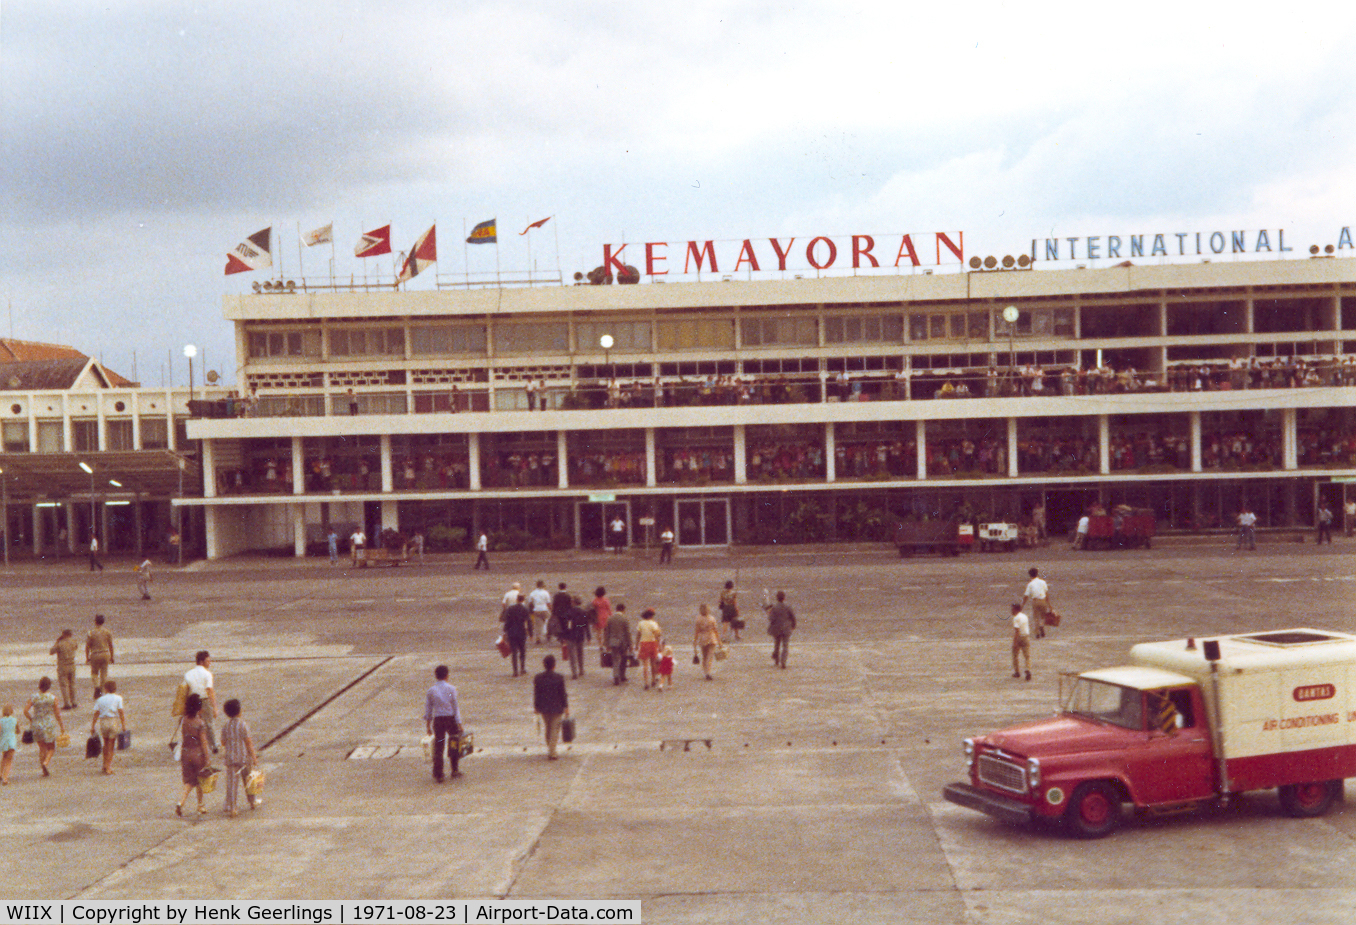 Jakarta (City) Airport, Jakarta Indonesia (WIIX) - Kamayoran Airport - Jakarta old airport , Aug 1971